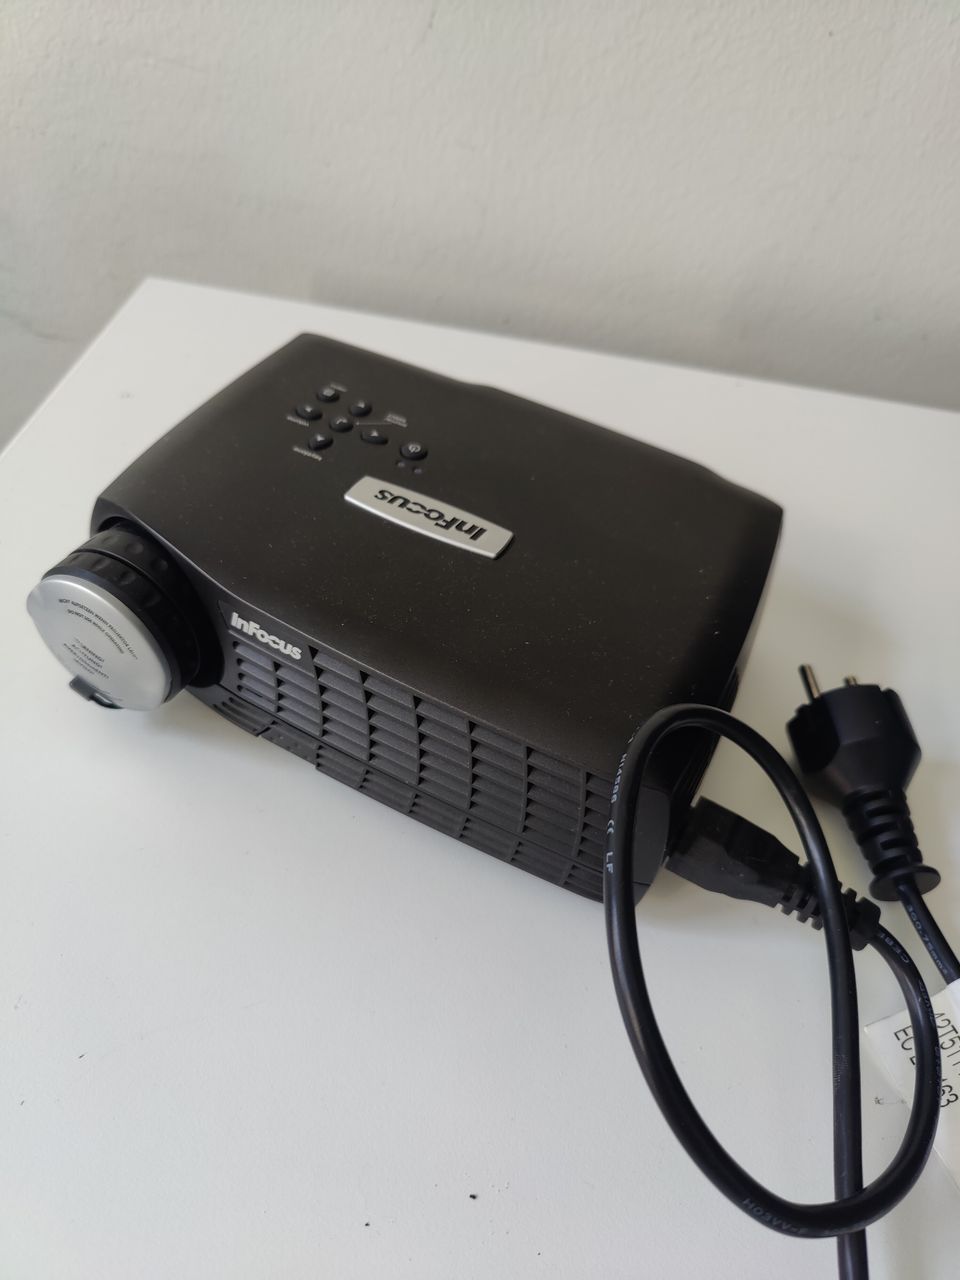 Portable video projector